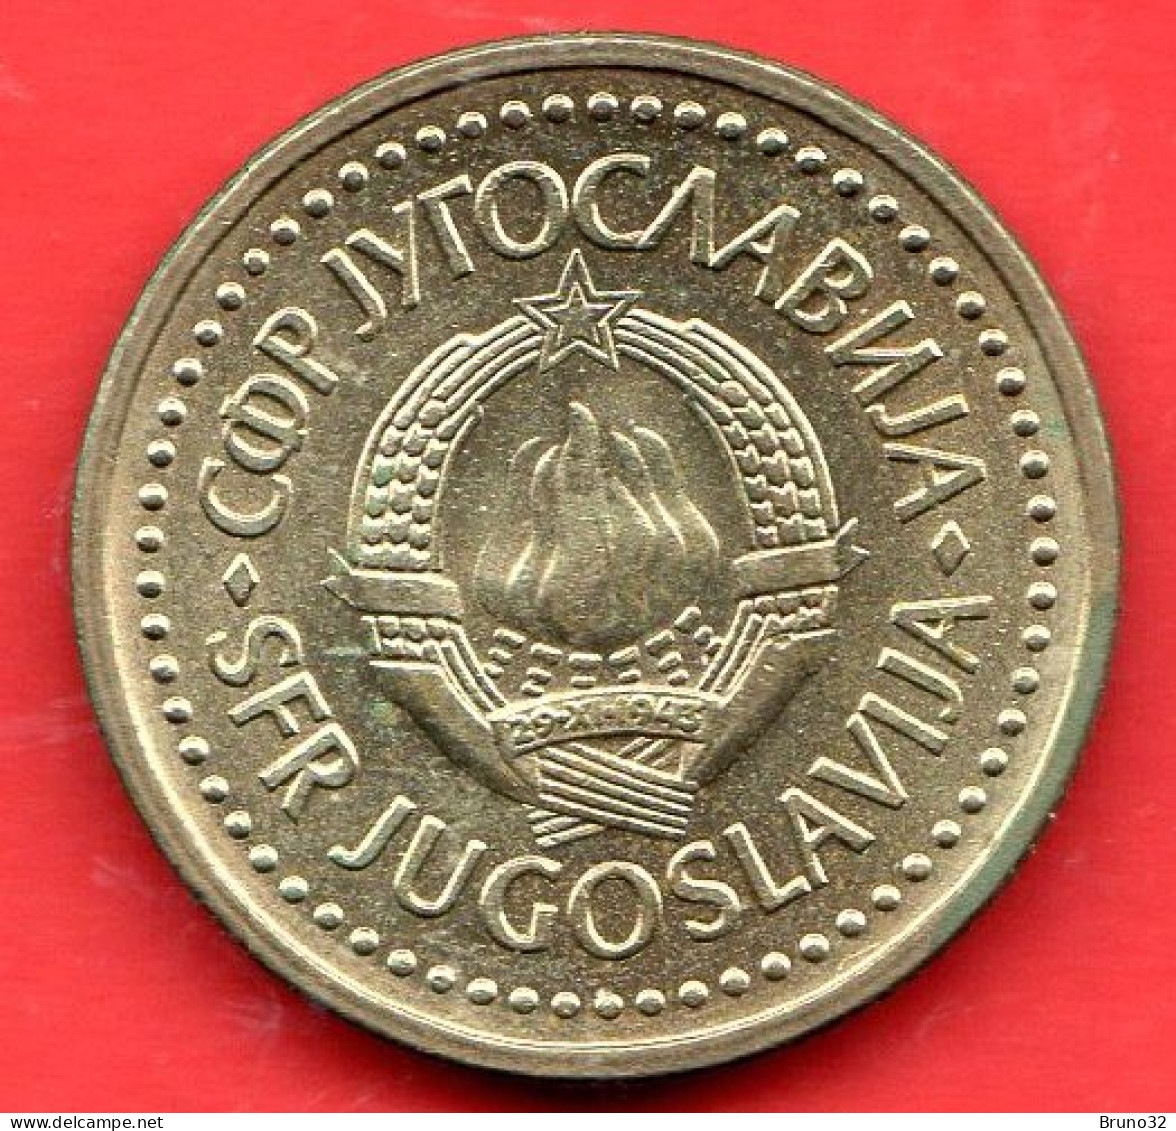 Jugoslavia - Jugoslavija - Yugoslavia - 1983 - 1 Dinar - QFDC/aUNC - Come Da Foto - Yugoslavia